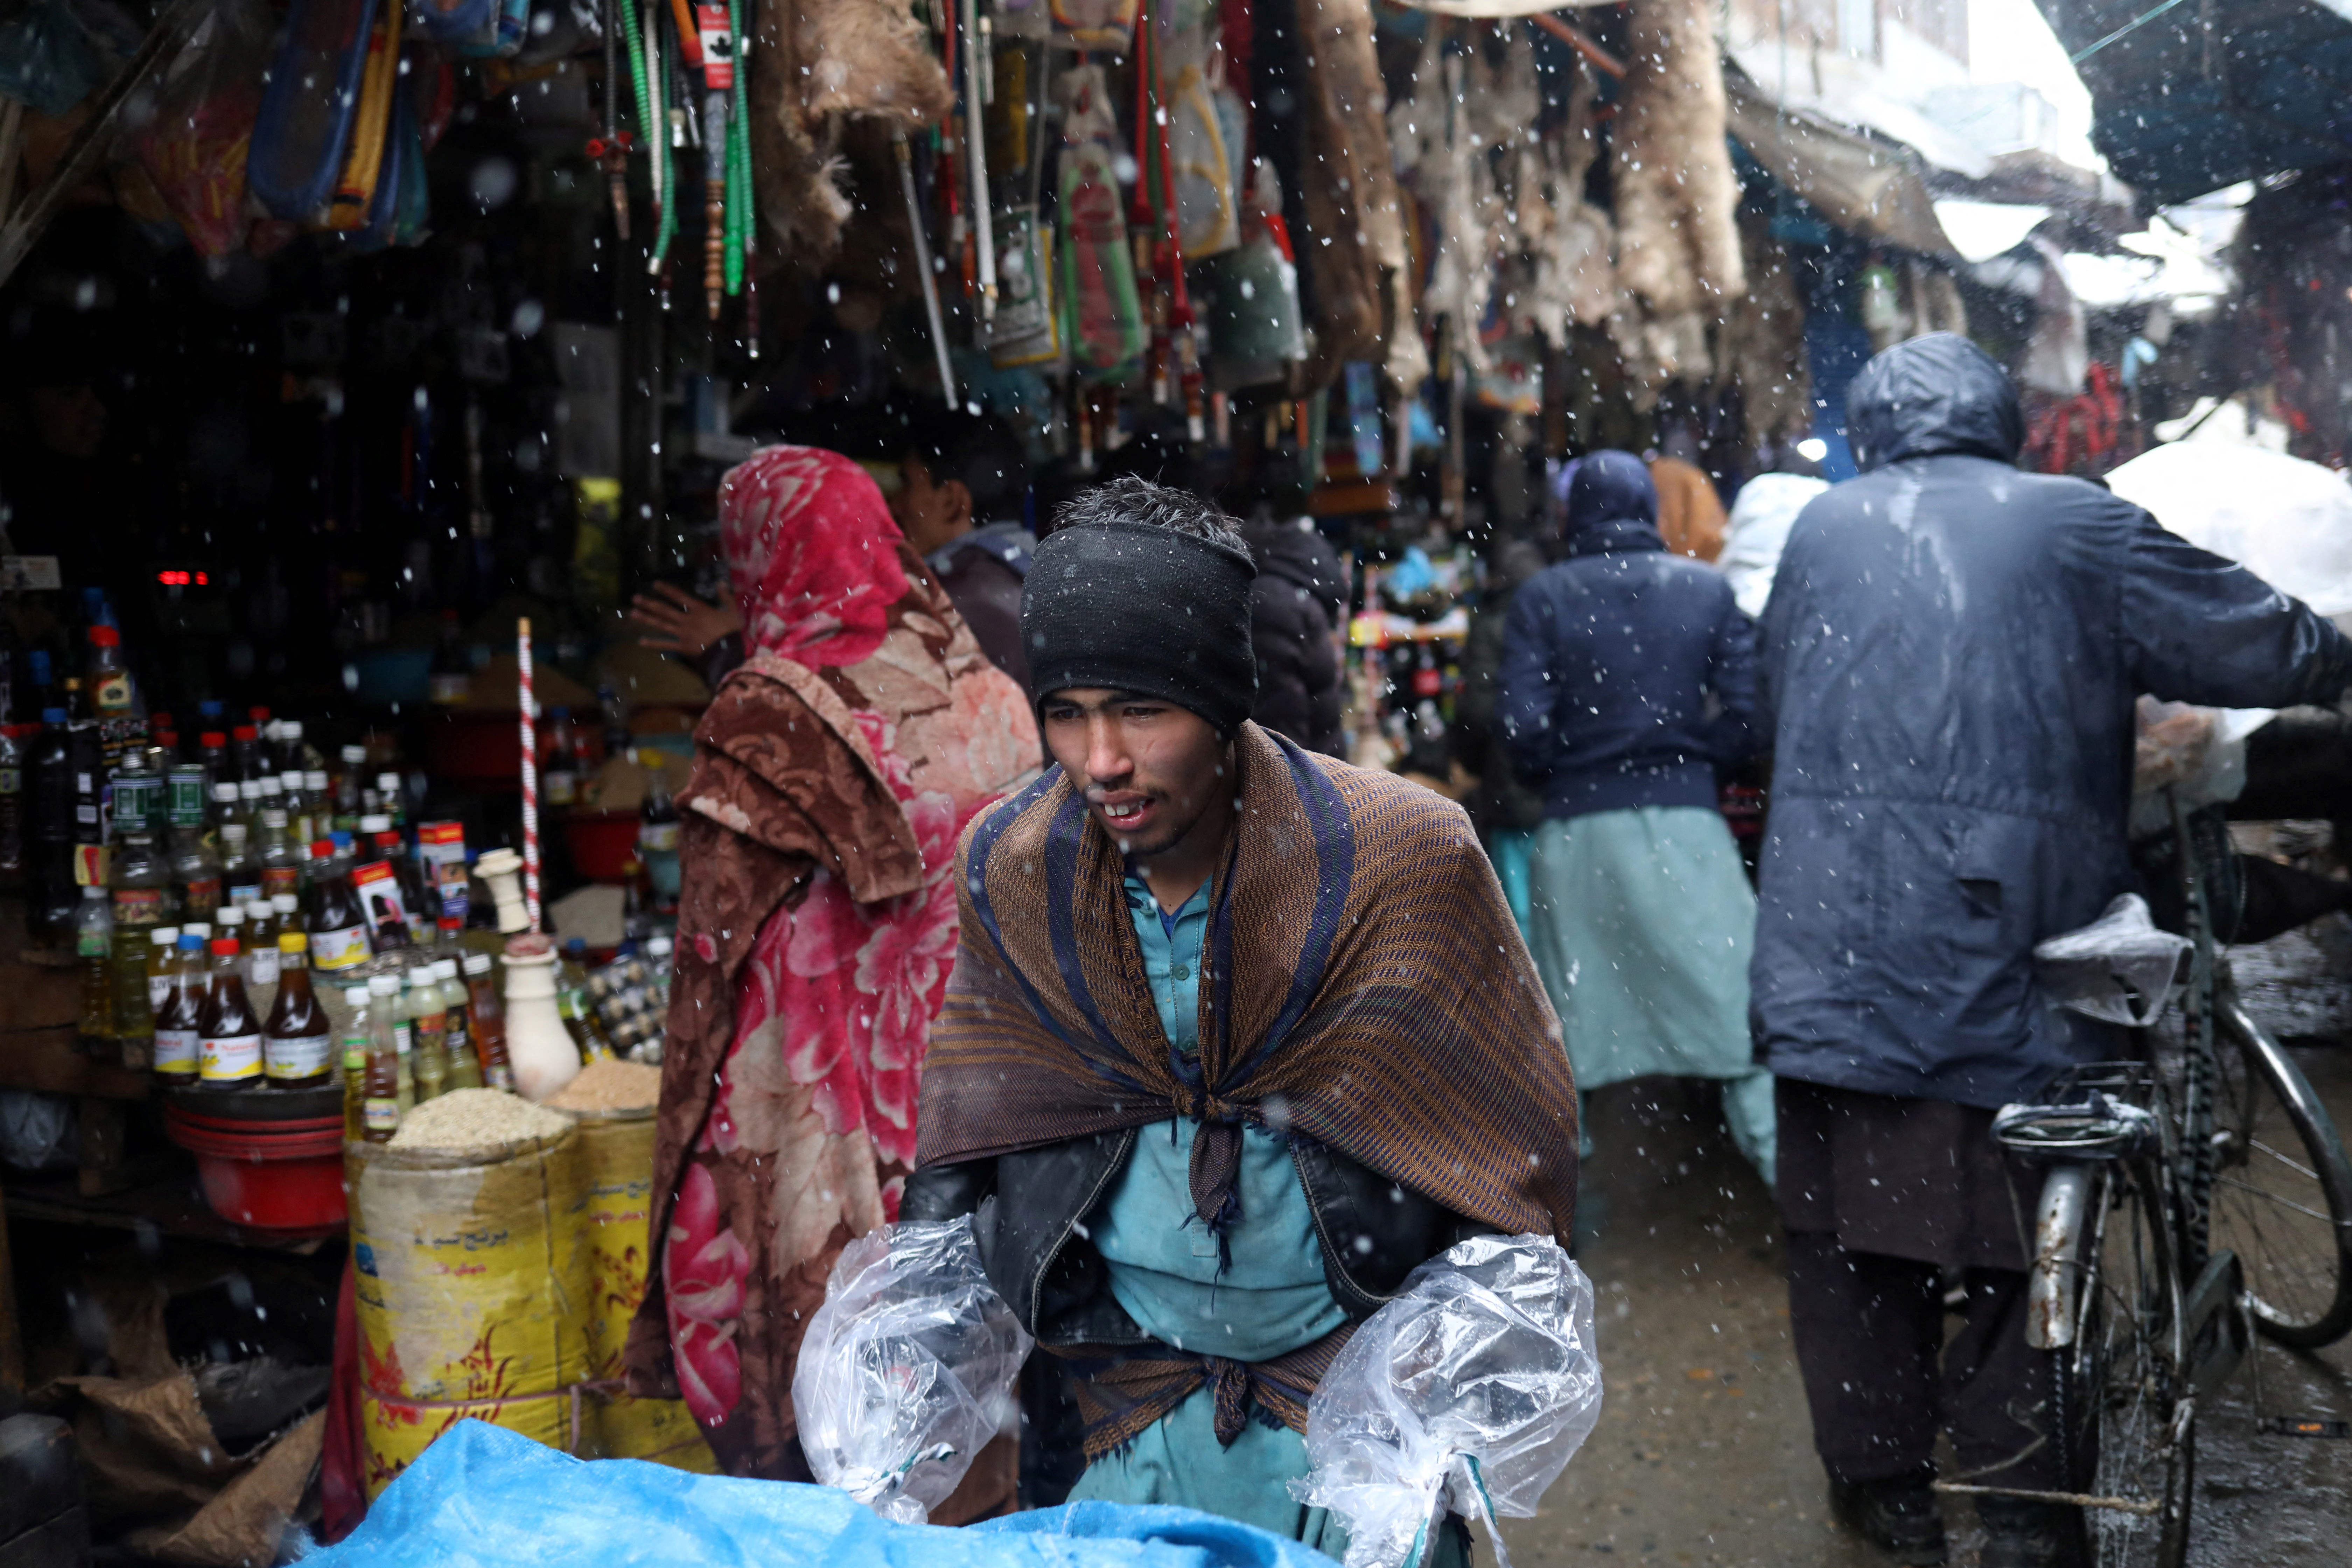 Afghan men walk in a market area during a snowfall in Kabul, Afghanistan, January 3, 2022. REUTERS/Ali Khara